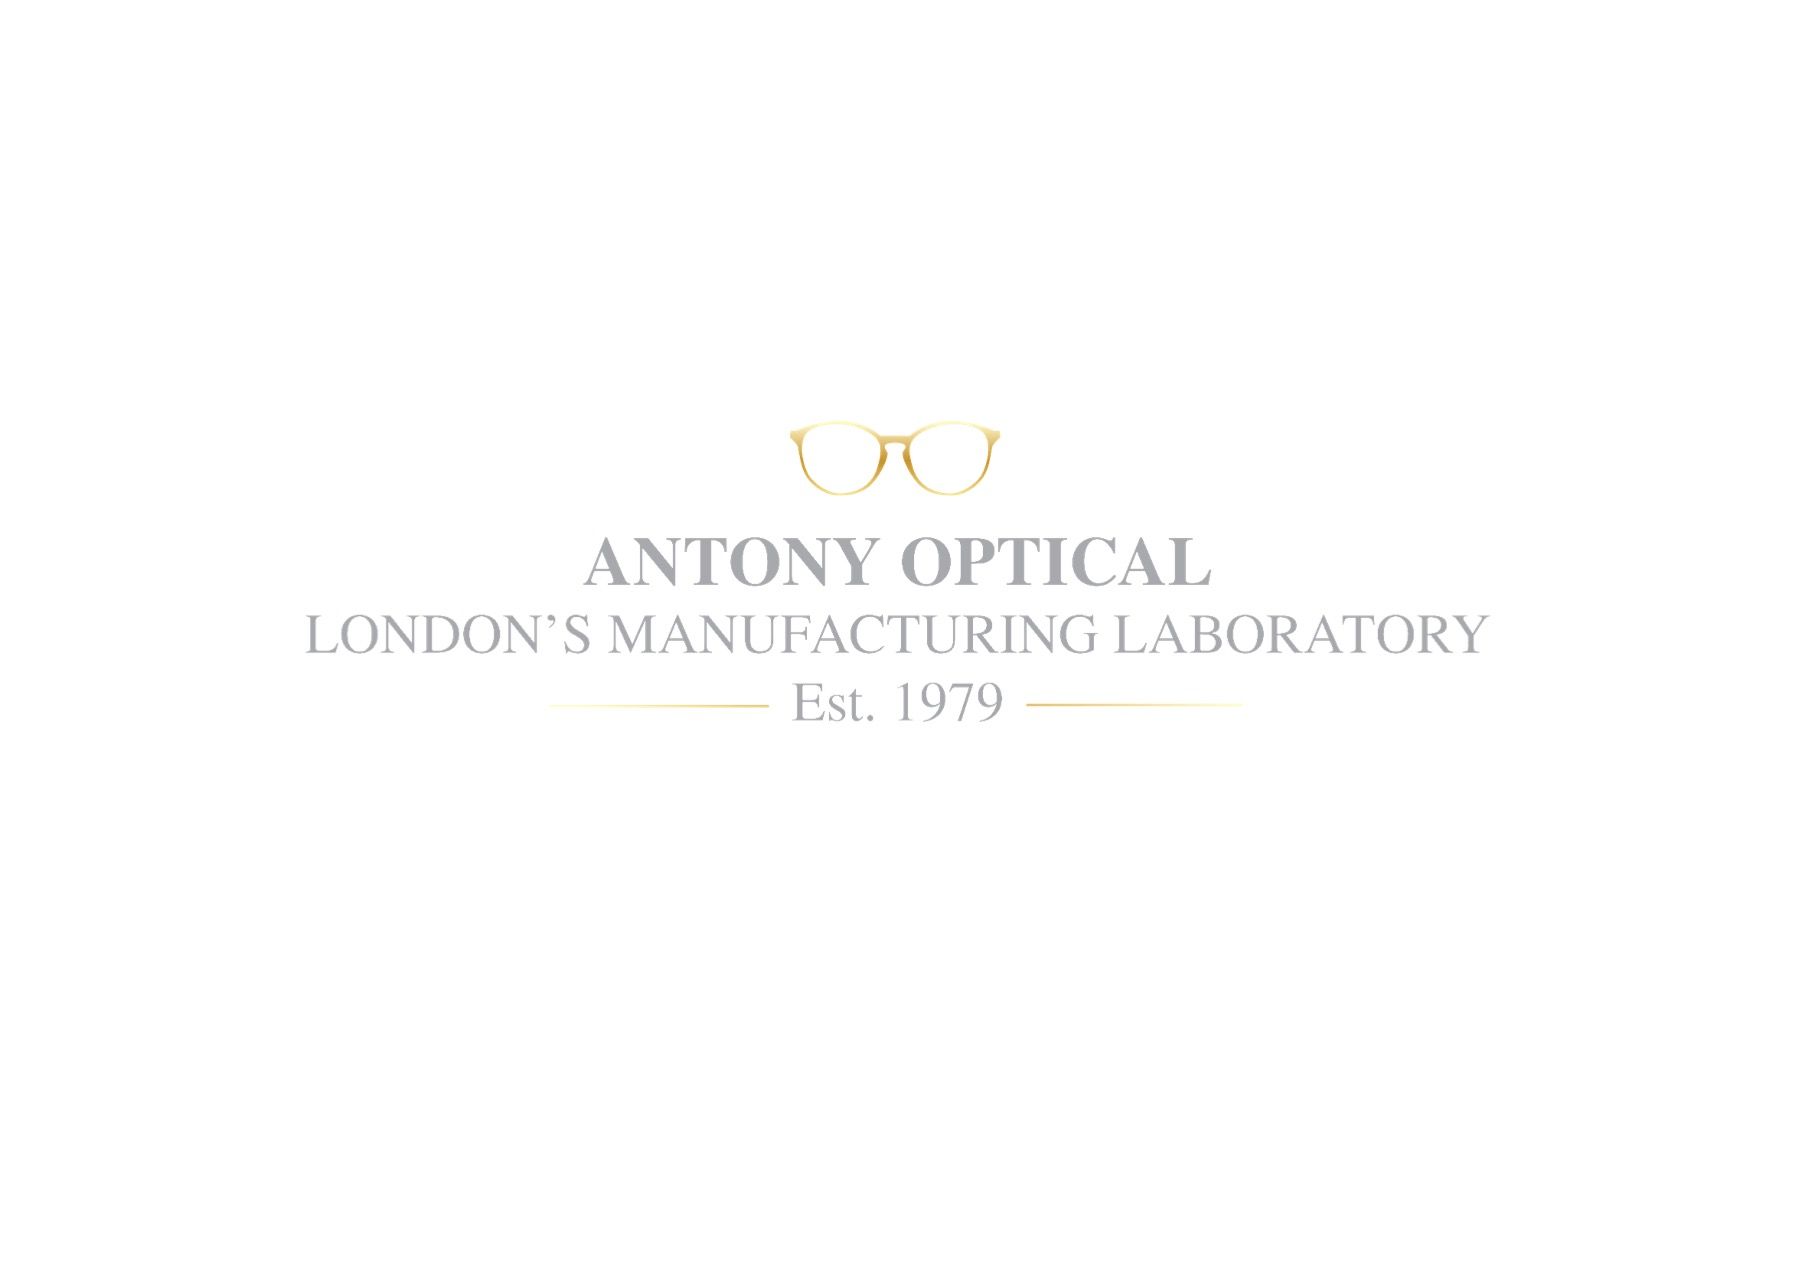 Antony Optical London’s Manurfacturing Laboratory